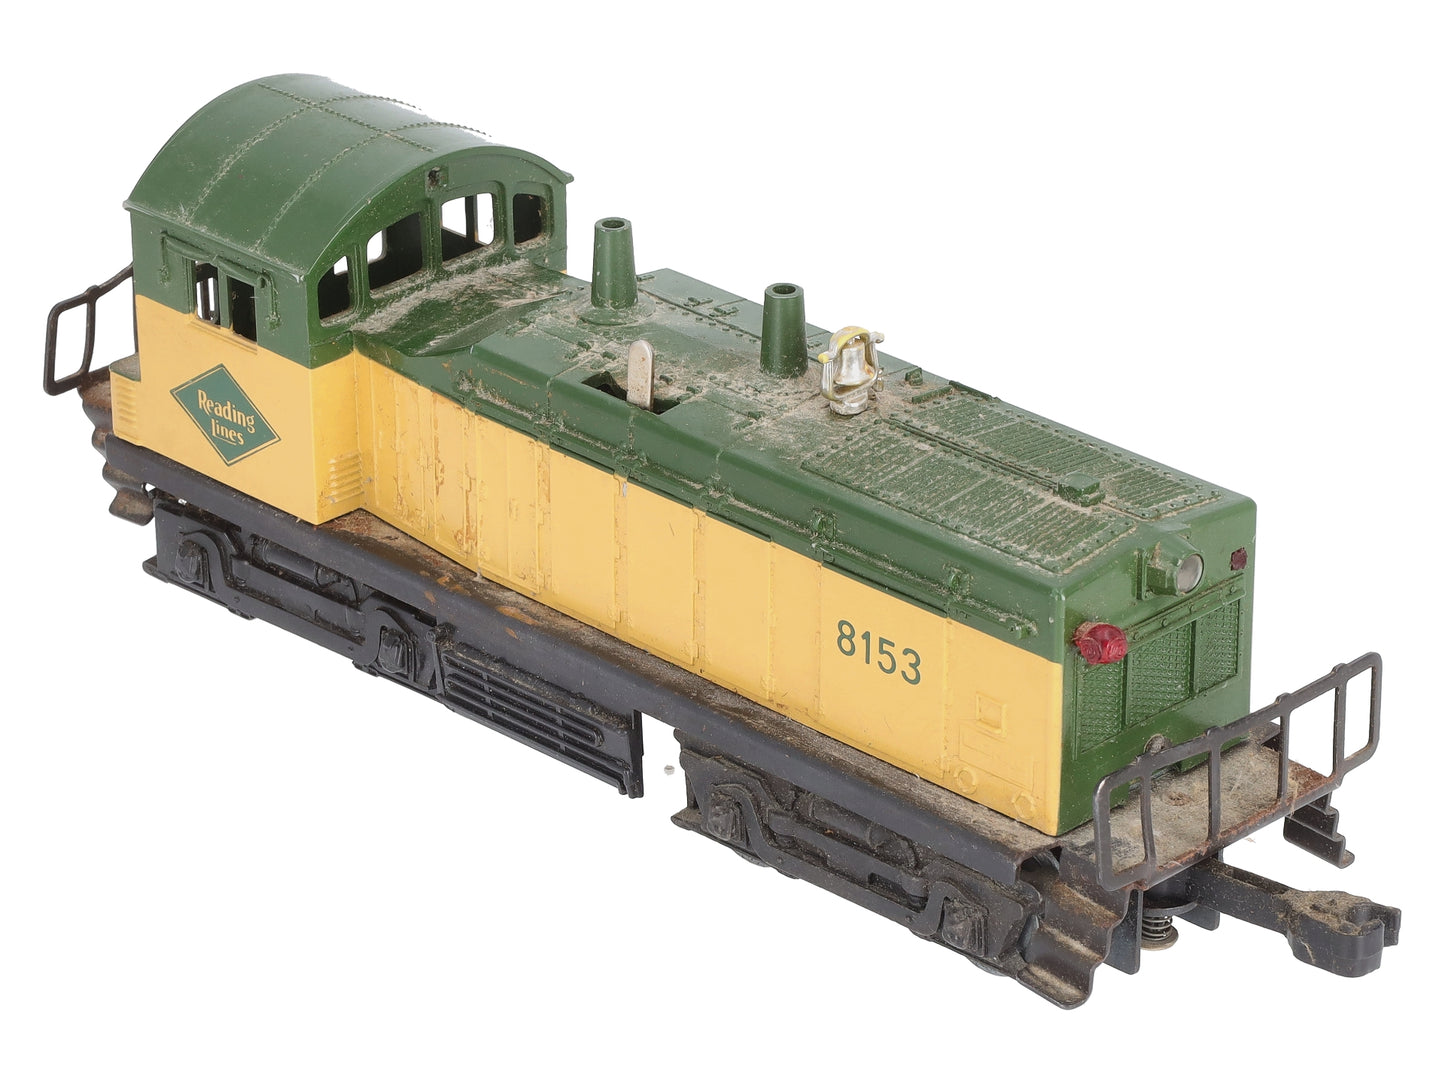 Lionel 6-8153 O Gauge Reading NW2 Powered Diesel Locomotive